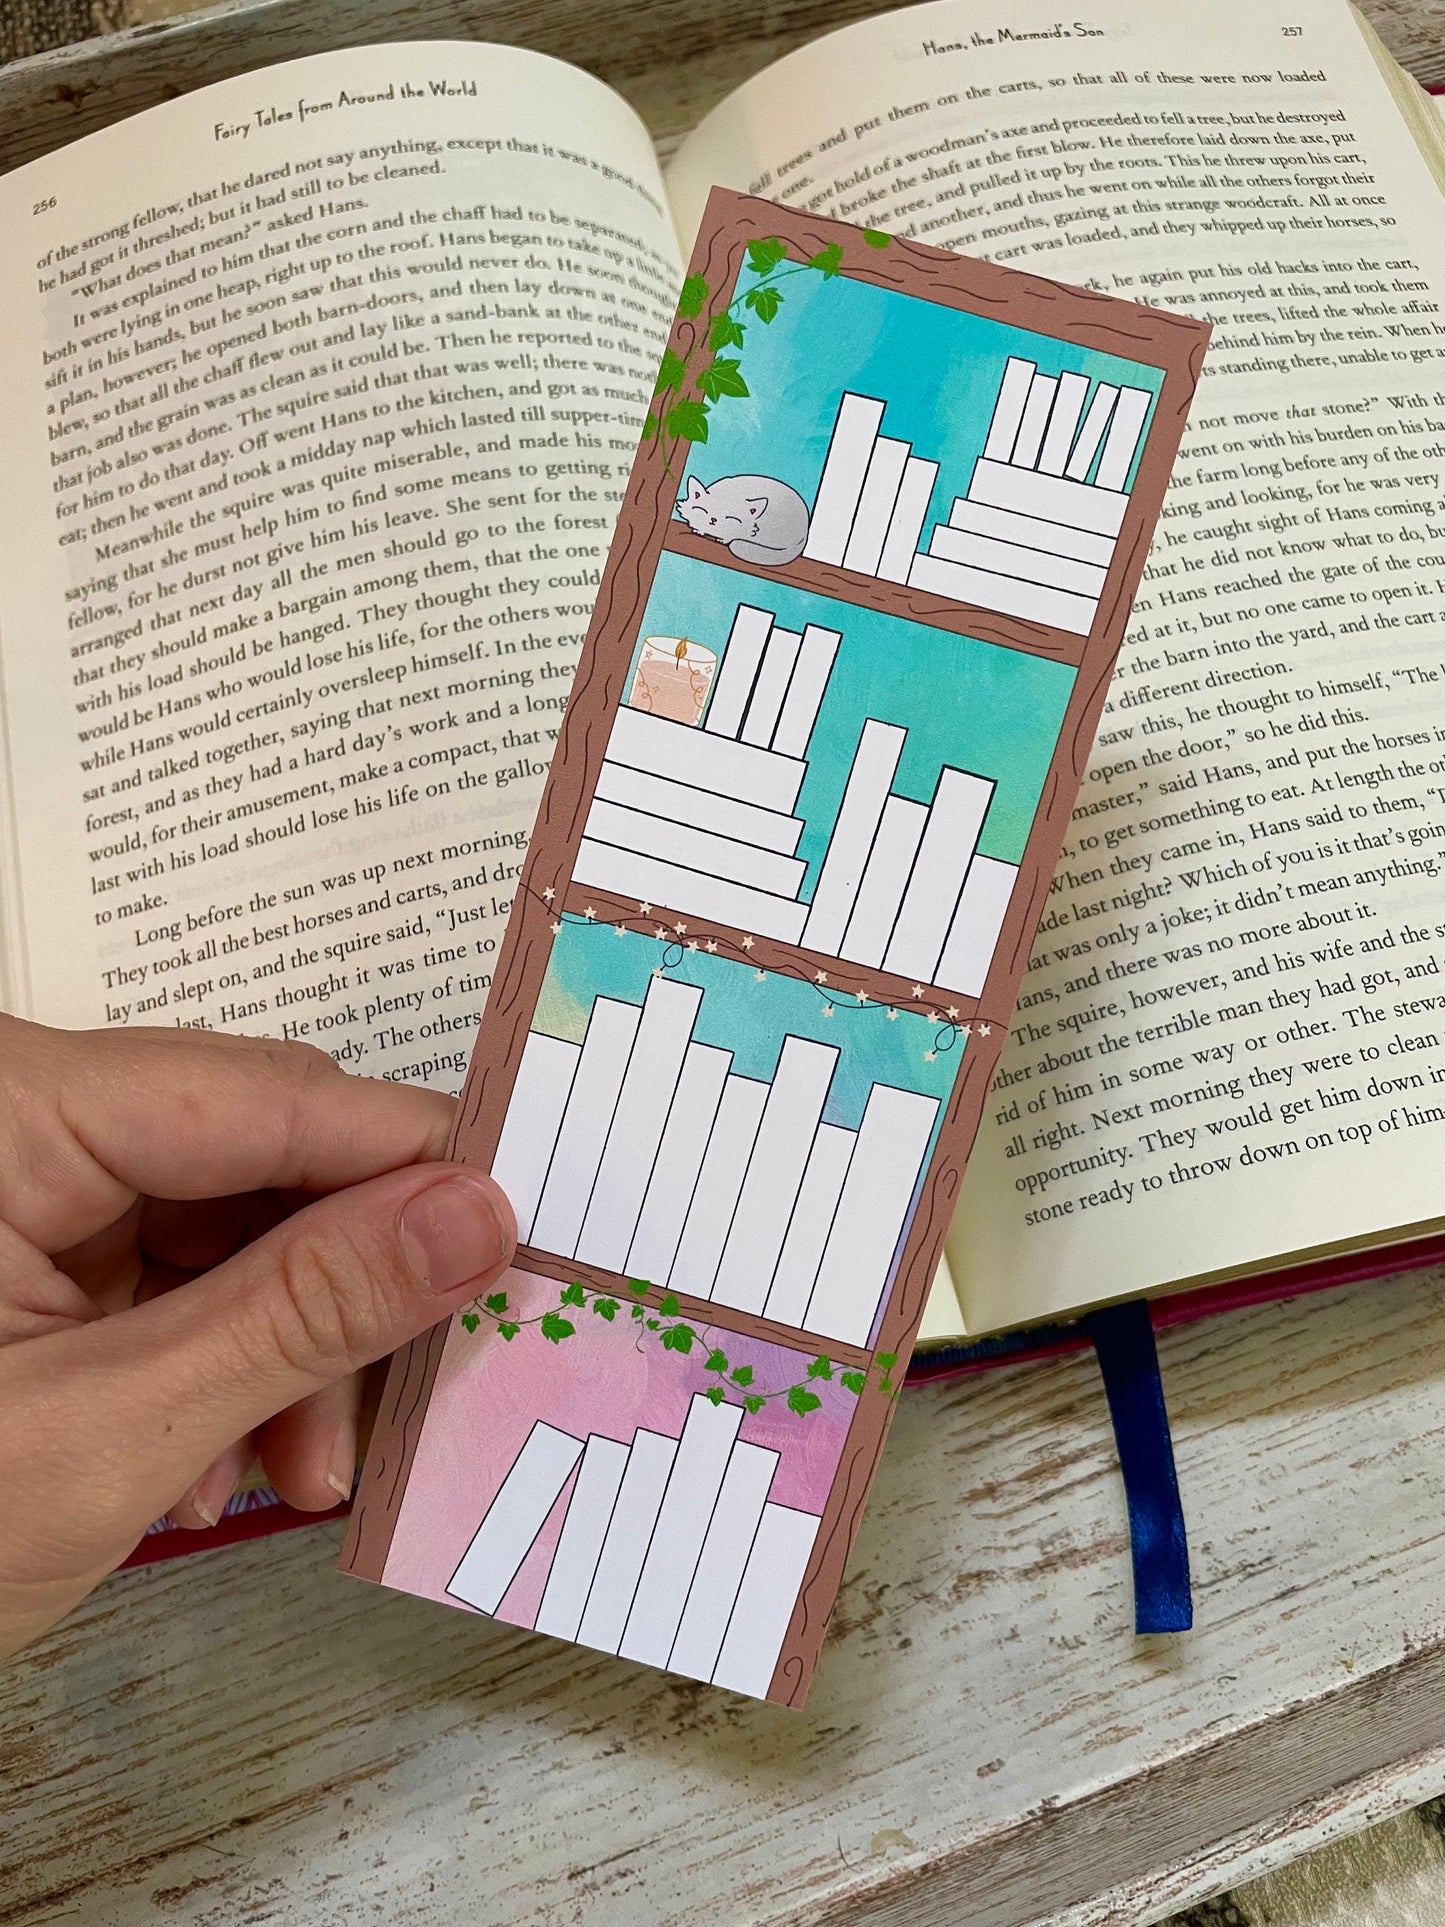 Bookshelf Tracker Bookmark /reading list book mark / stocking stuffer / gifts under 5 / bookish gift / reading log / book club gift/ booktok